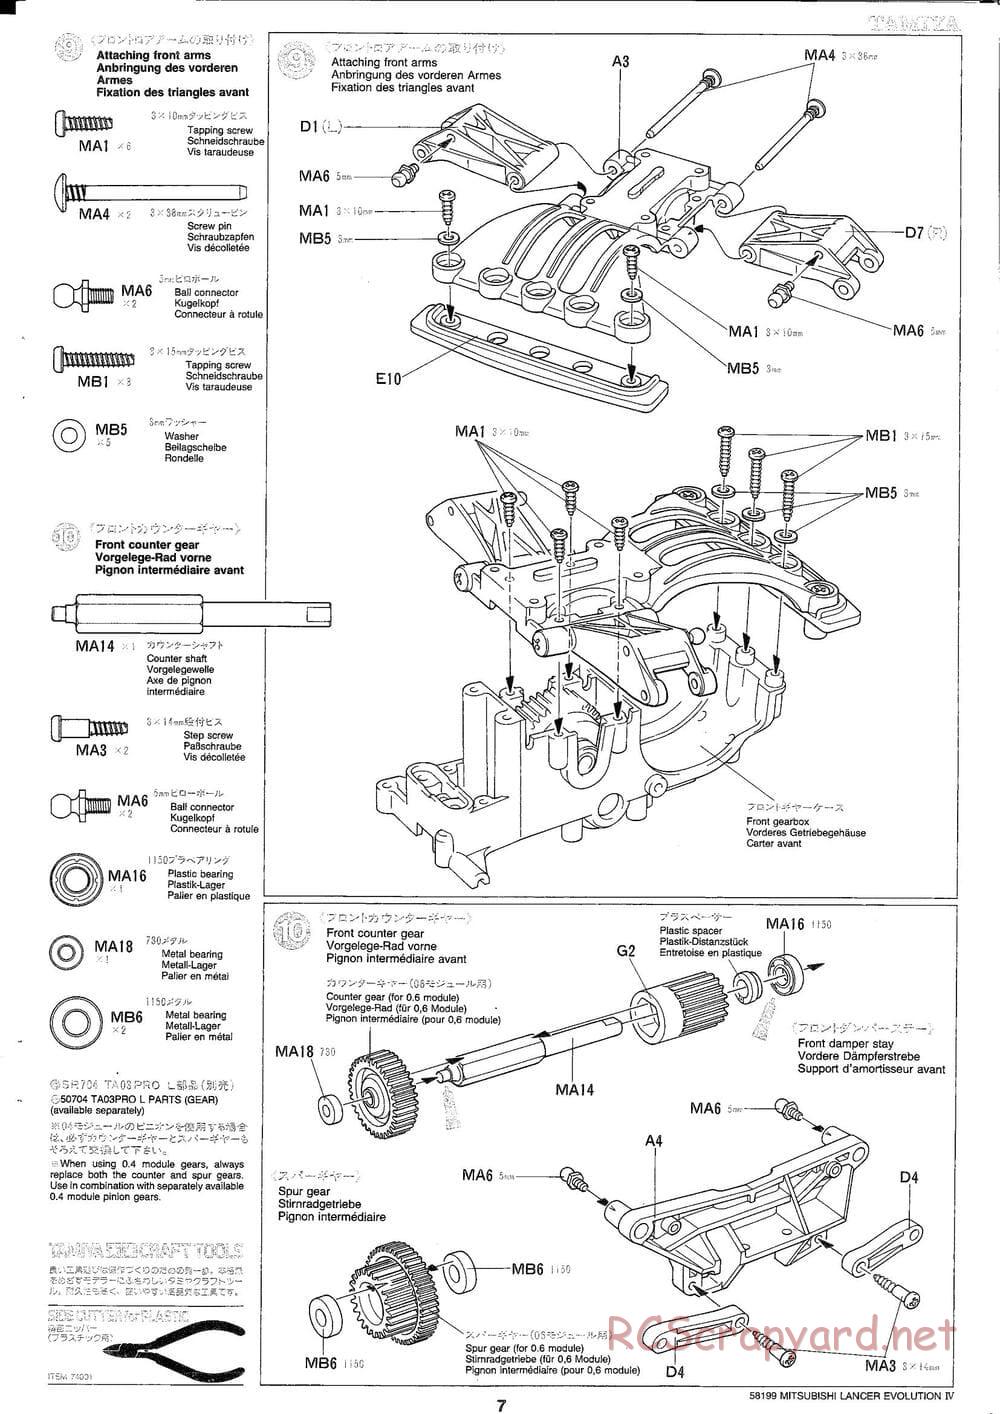 Tamiya - Mitsubishi Lancer Evolution IV - TA-03F Chassis - Manual - Page 7